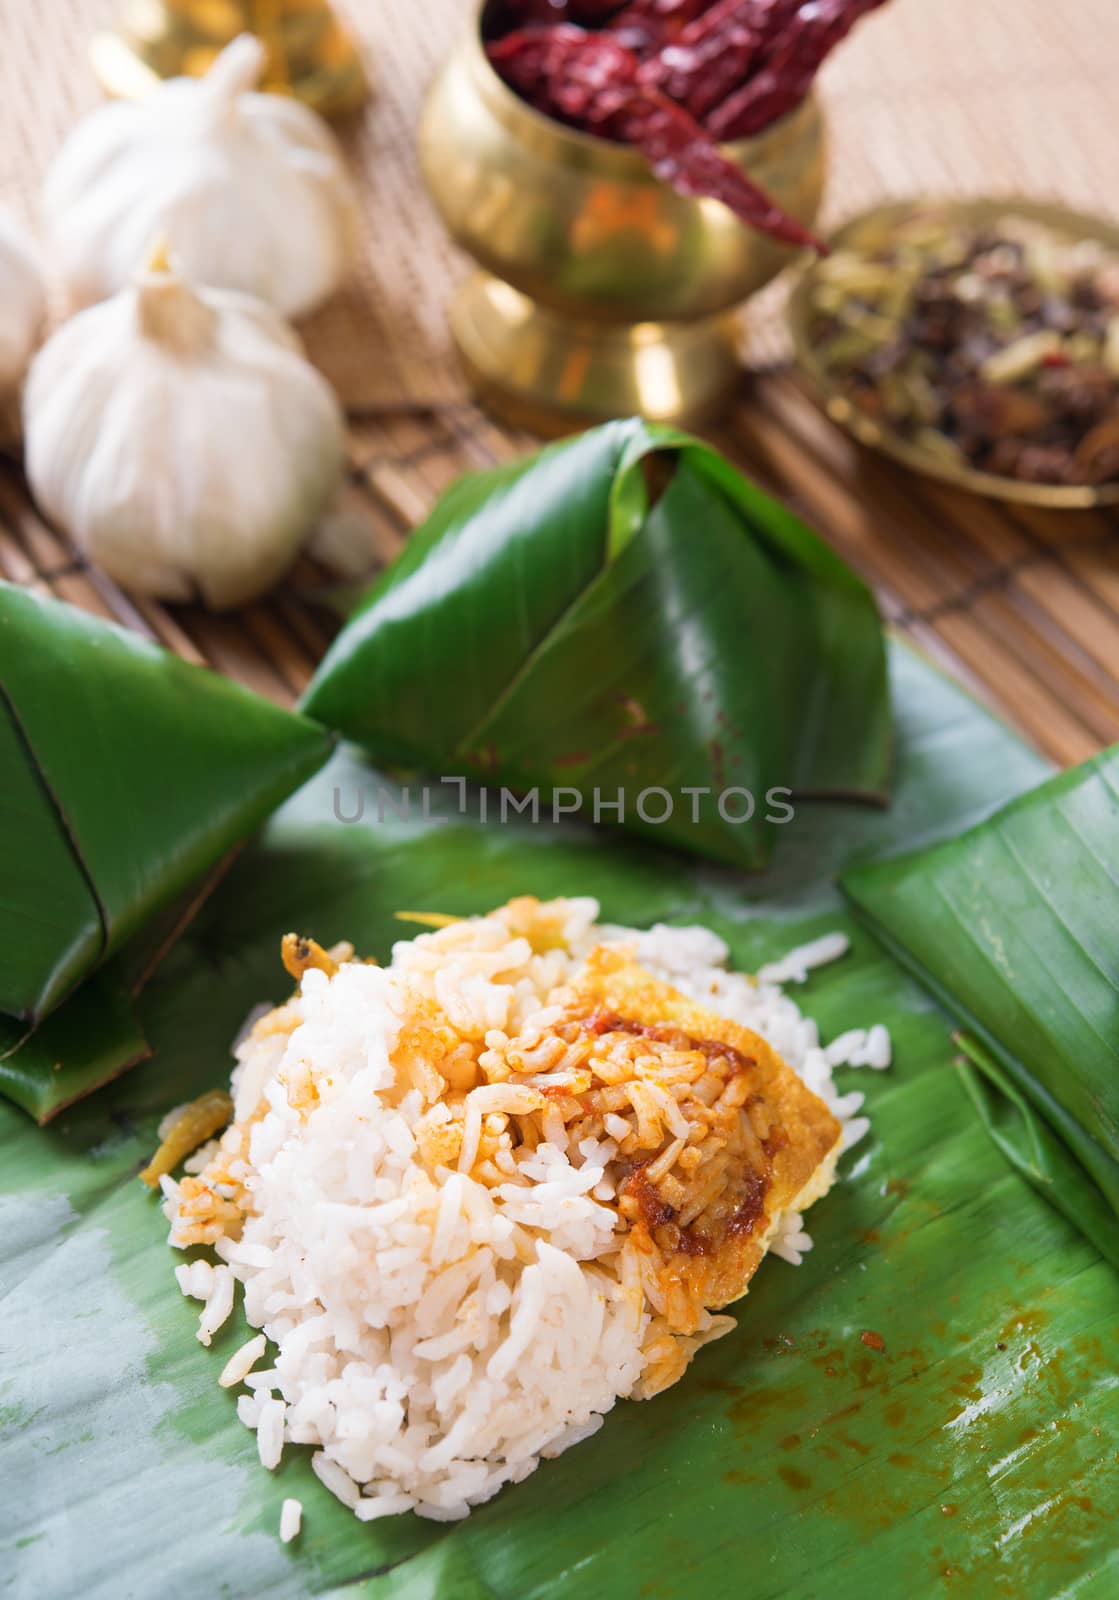 Nasi lemak Malay dish, popular traditional Malaysian food wrapped with banana leaf.